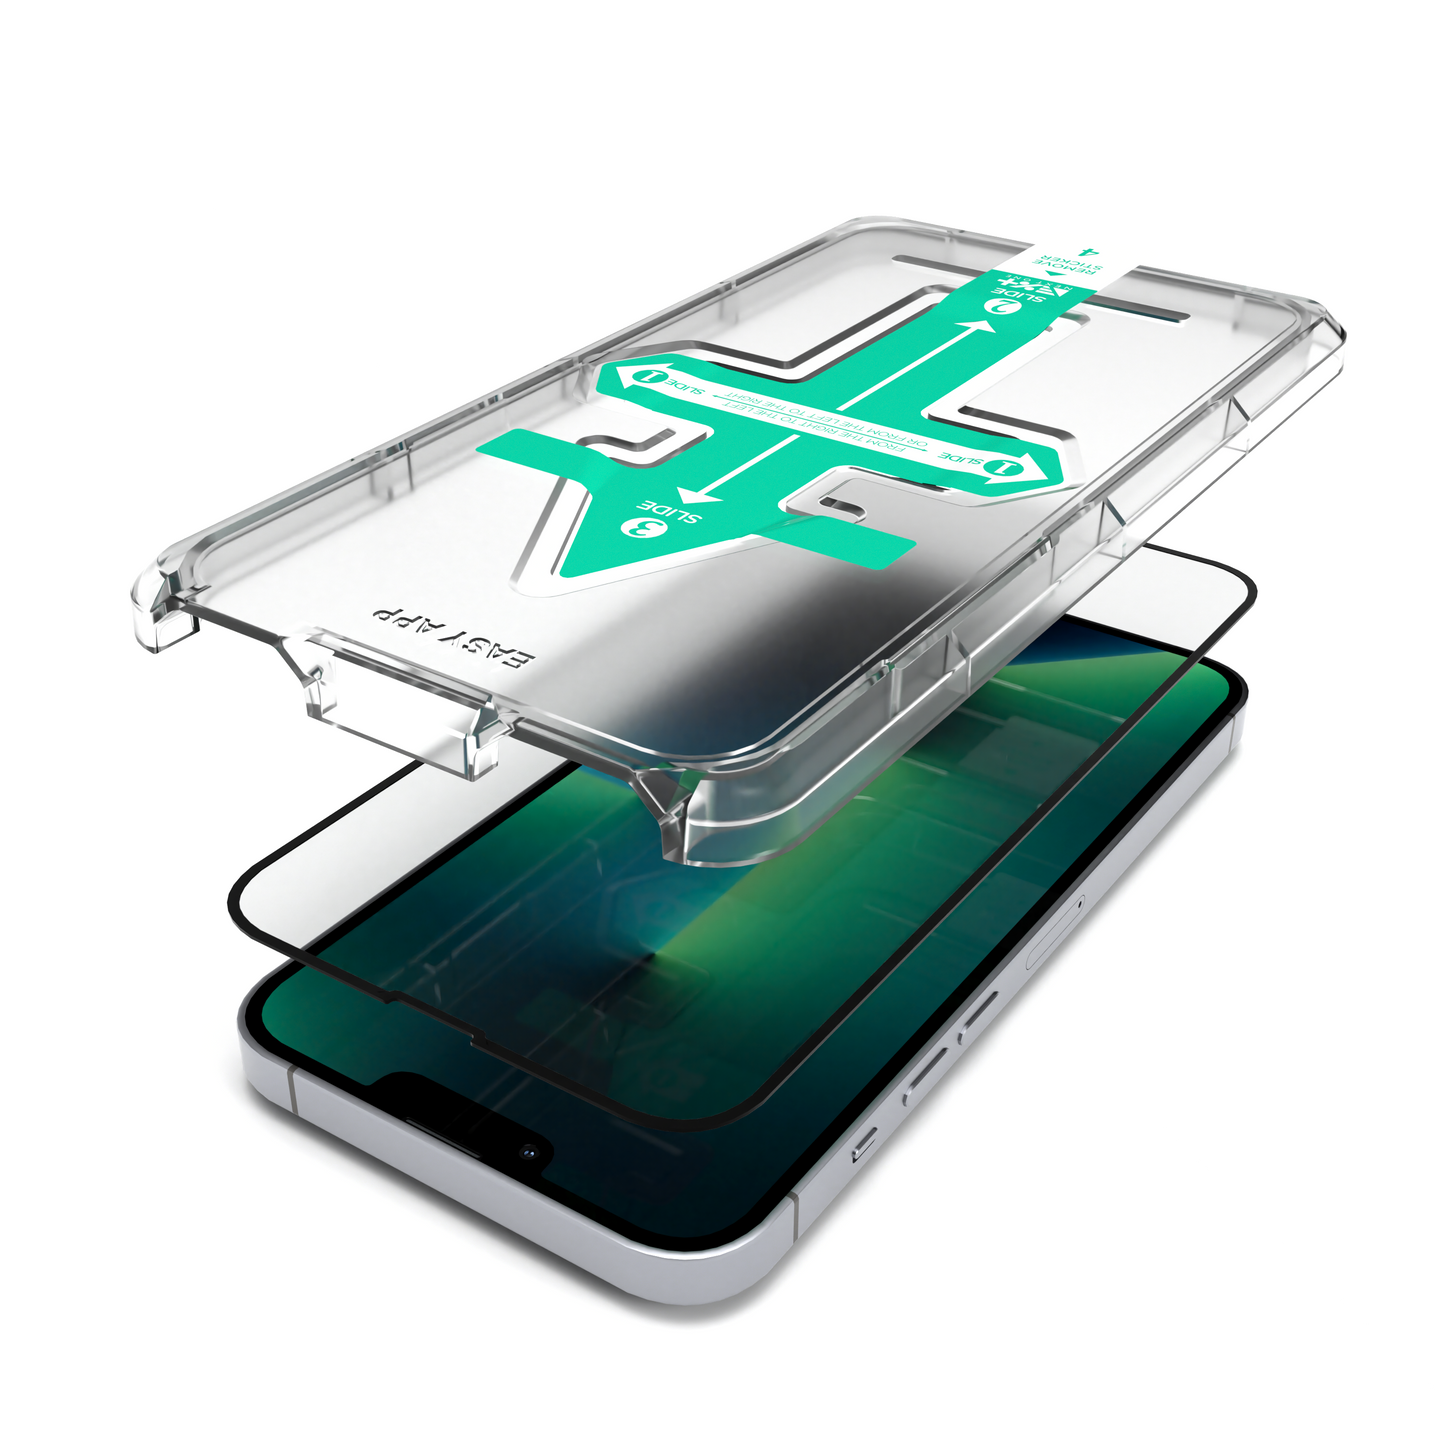 NEXT.ONE iPhone Schutzglas mit Anbringhilfe - iPhone 13 Pro Max